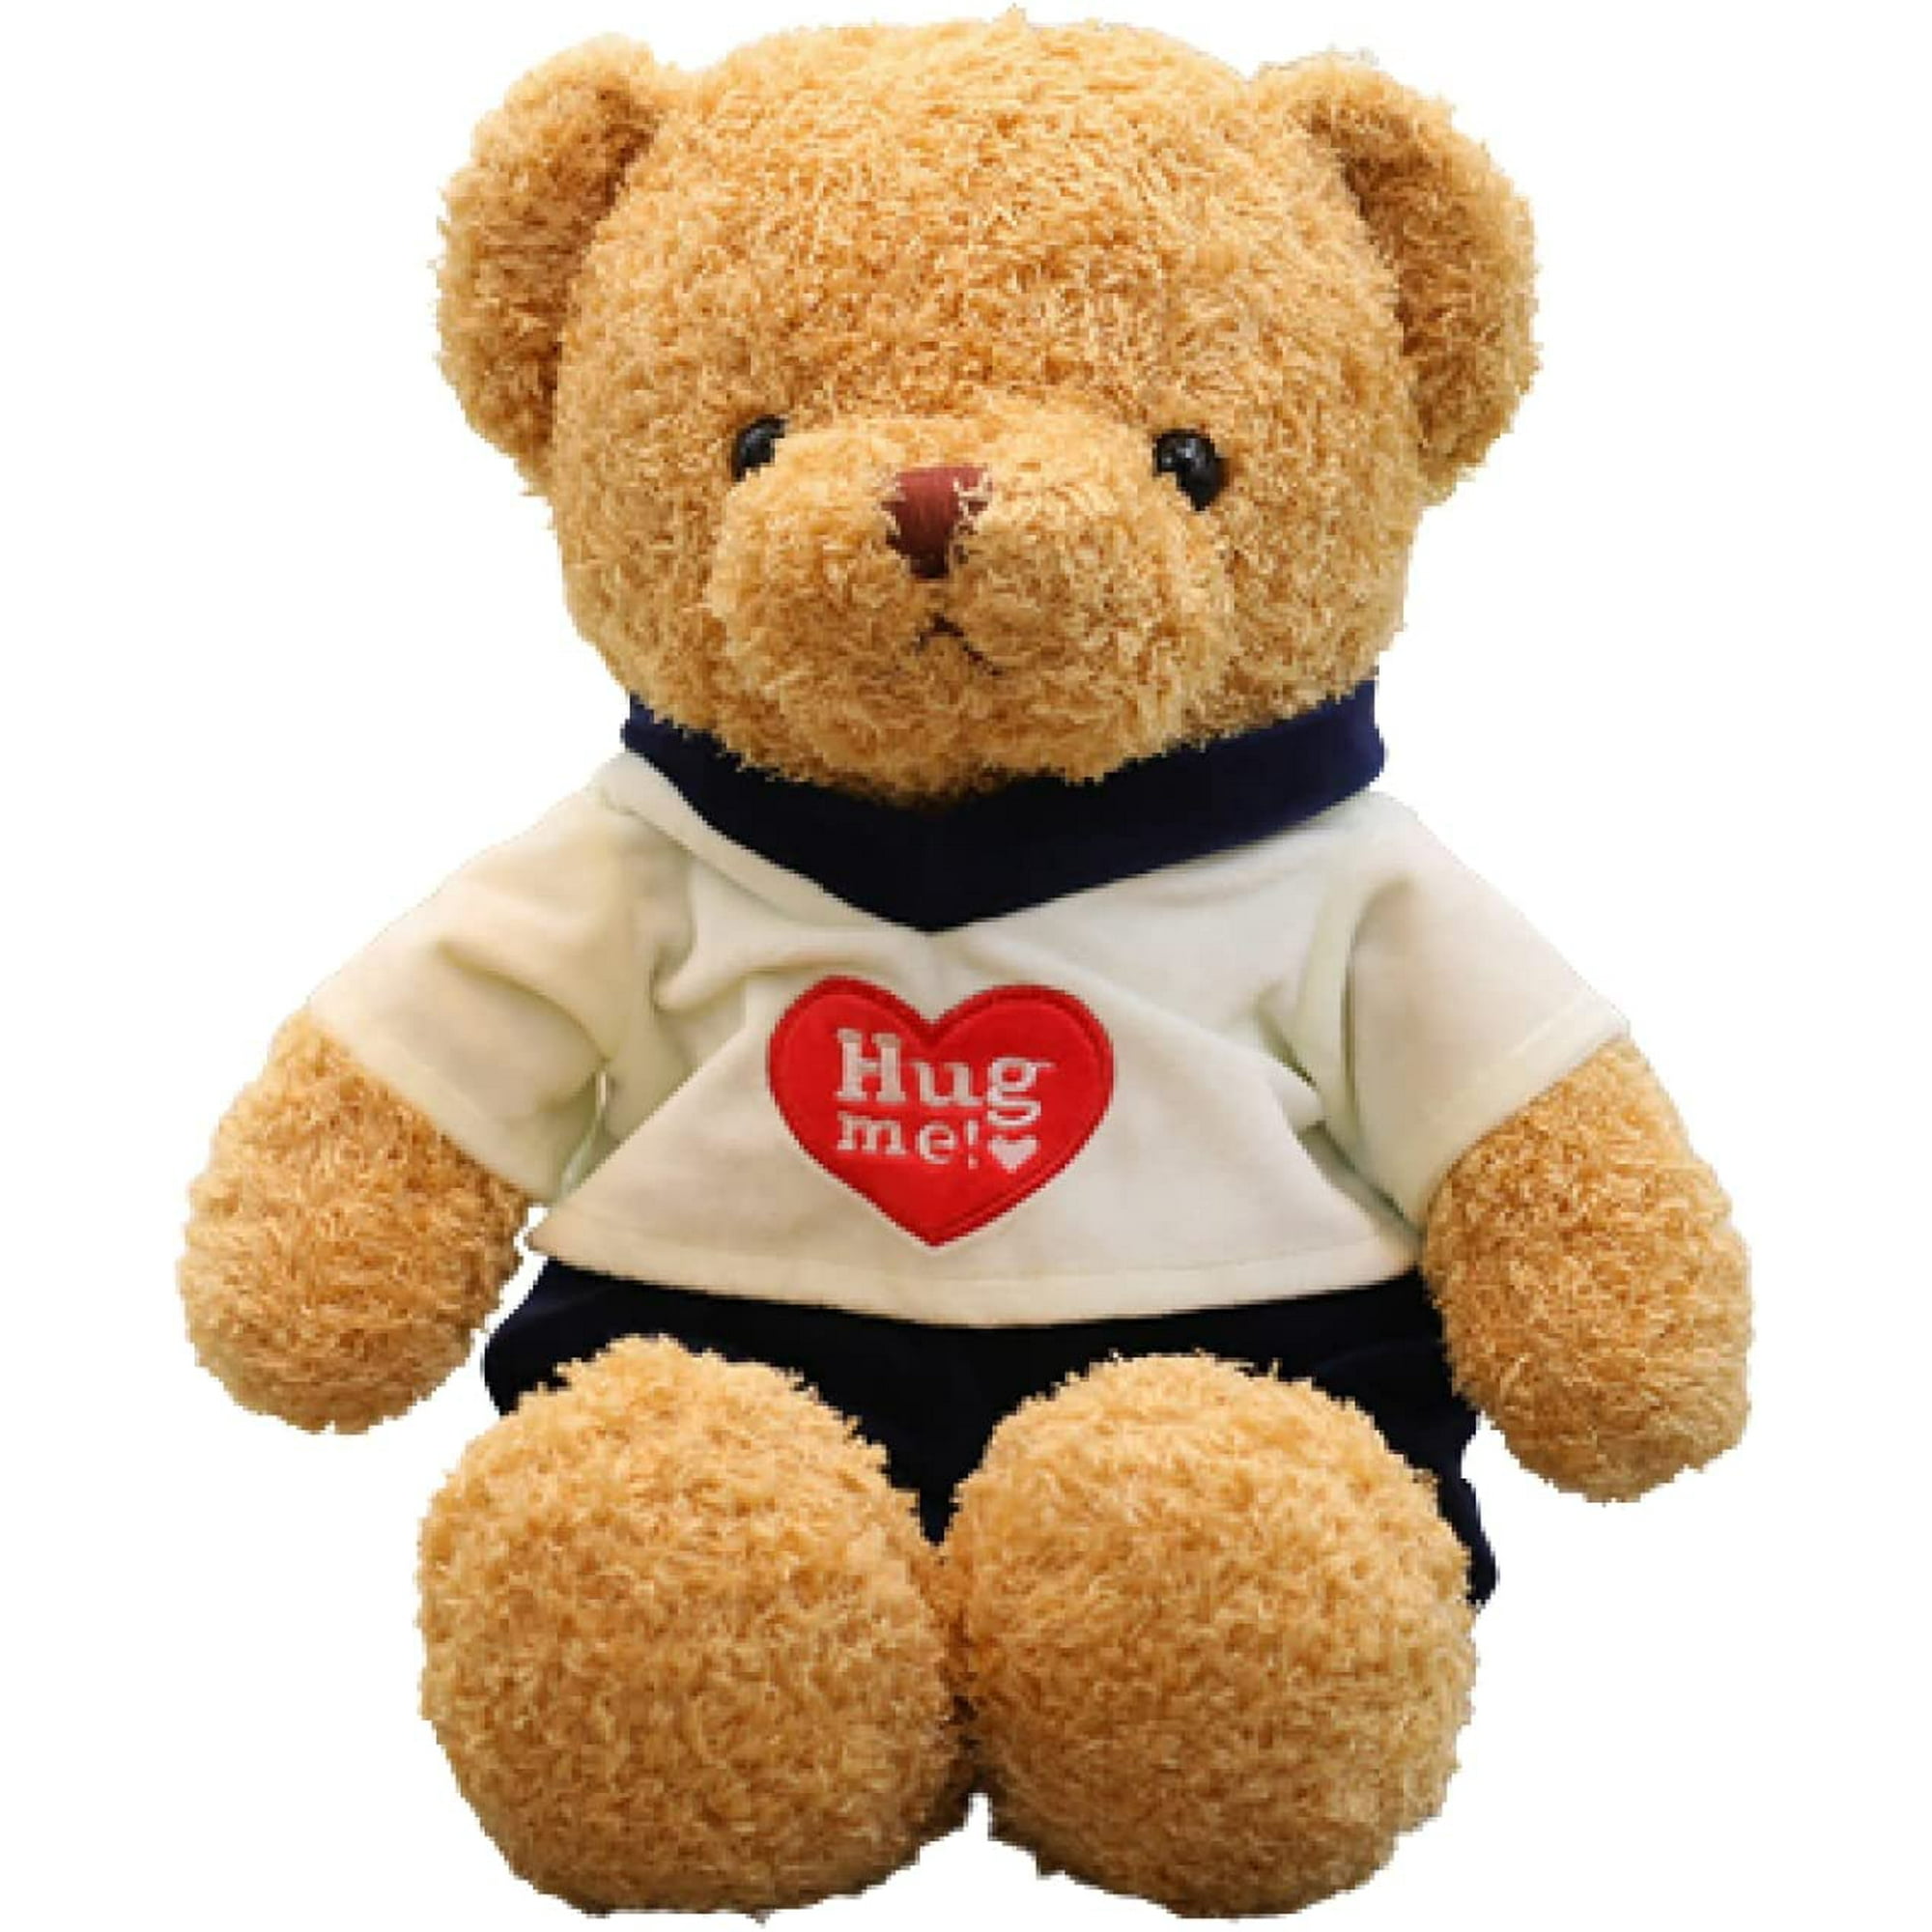 Teddy Bear Soft Stuffed Cute Sweater Tie Pillow Plush Toy Puppet